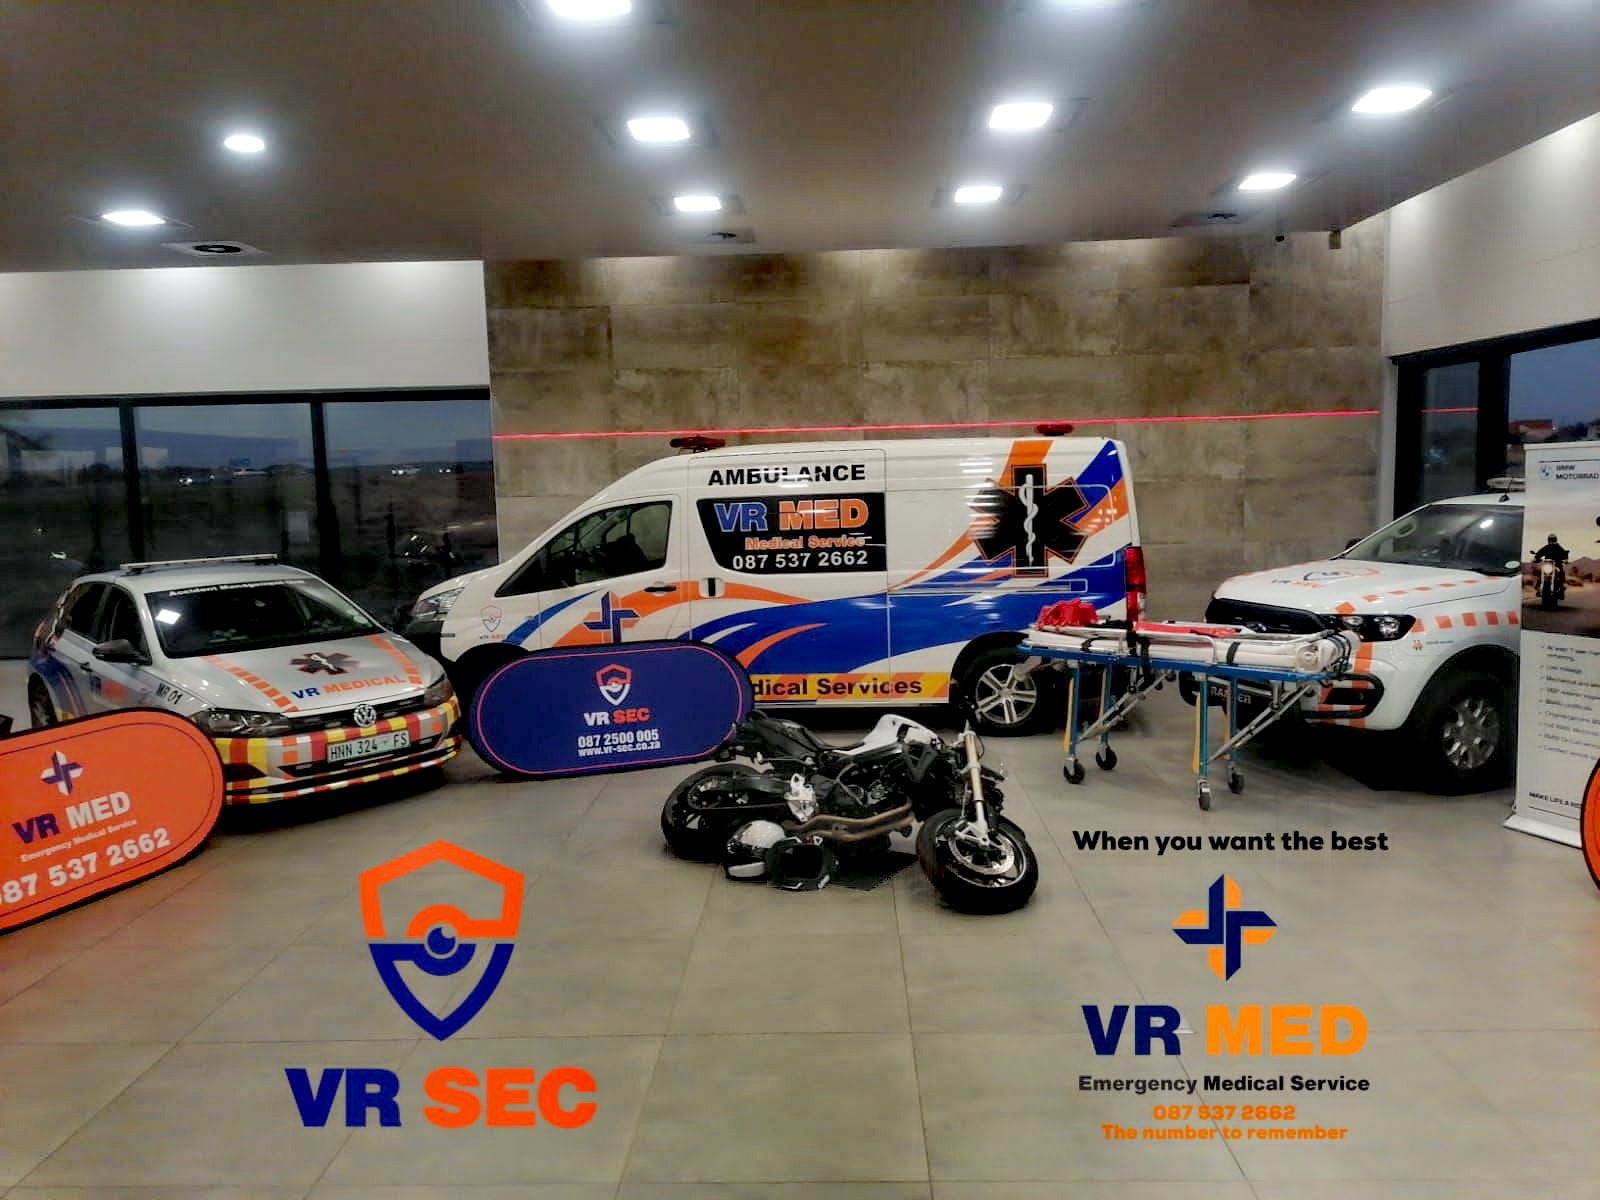 VRMED, VRSEC, and Sovereign BMW in Bloemfontein held a motorbike safety workshop for awareness